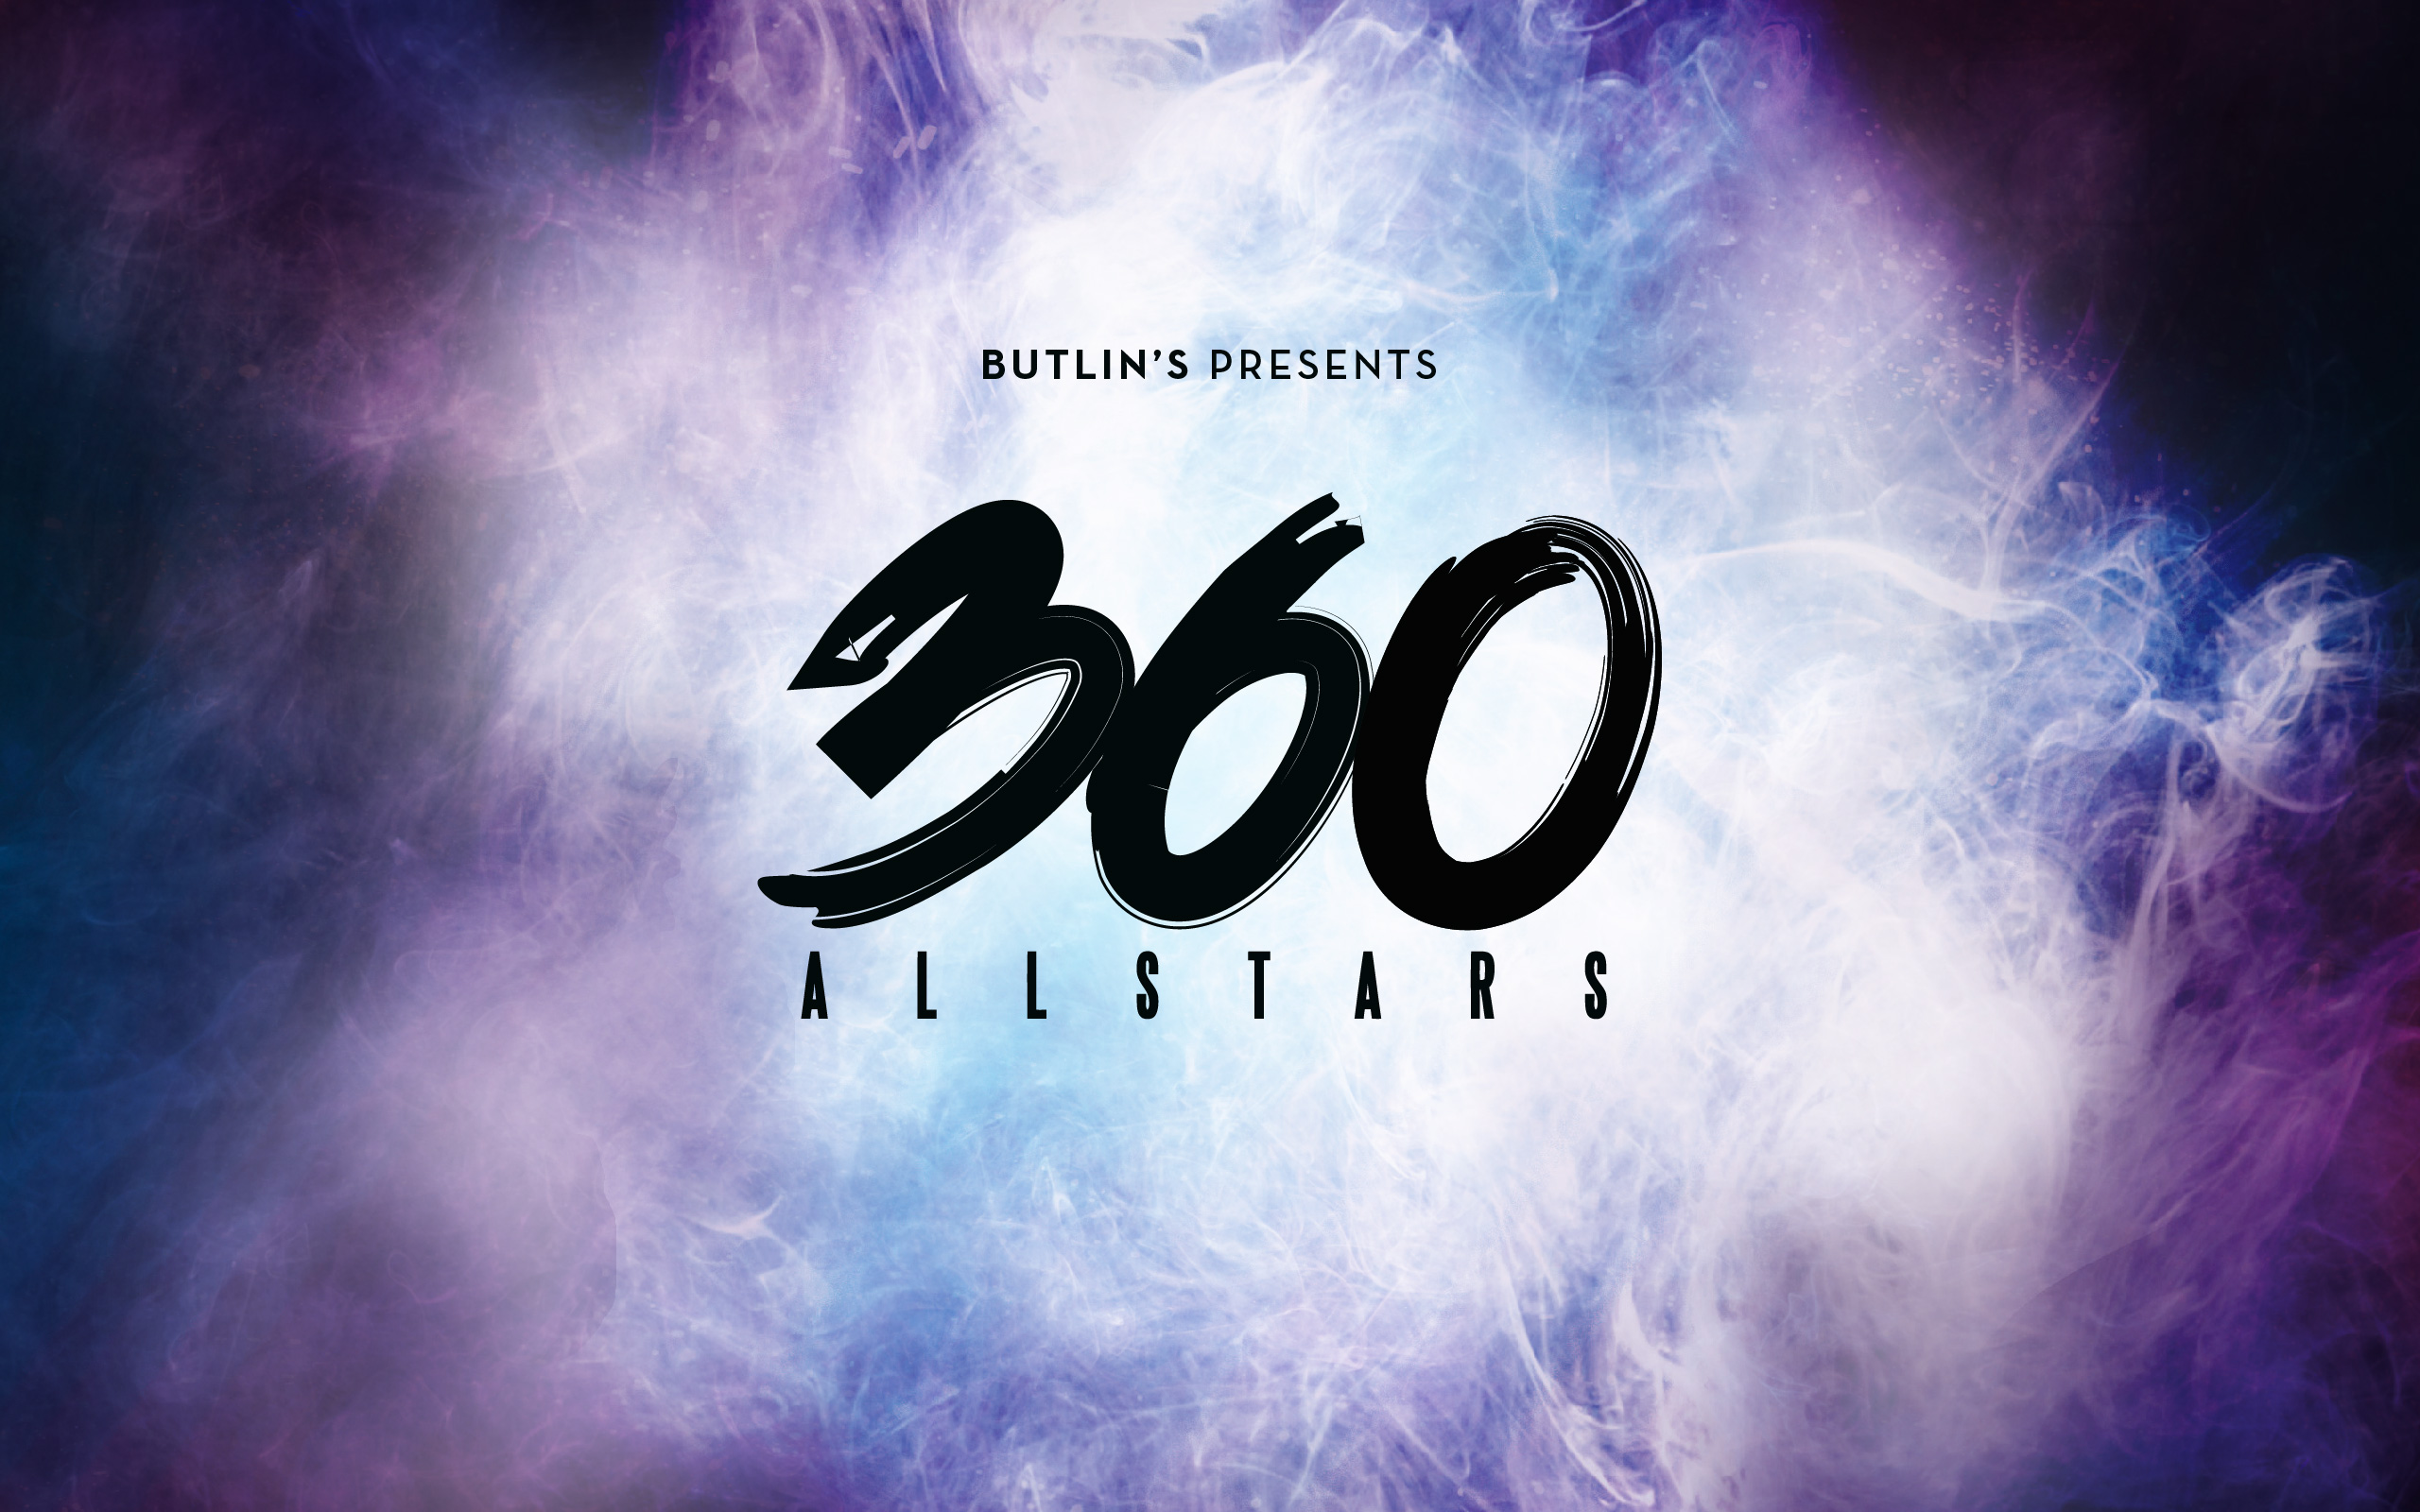 360 allstars tour dates